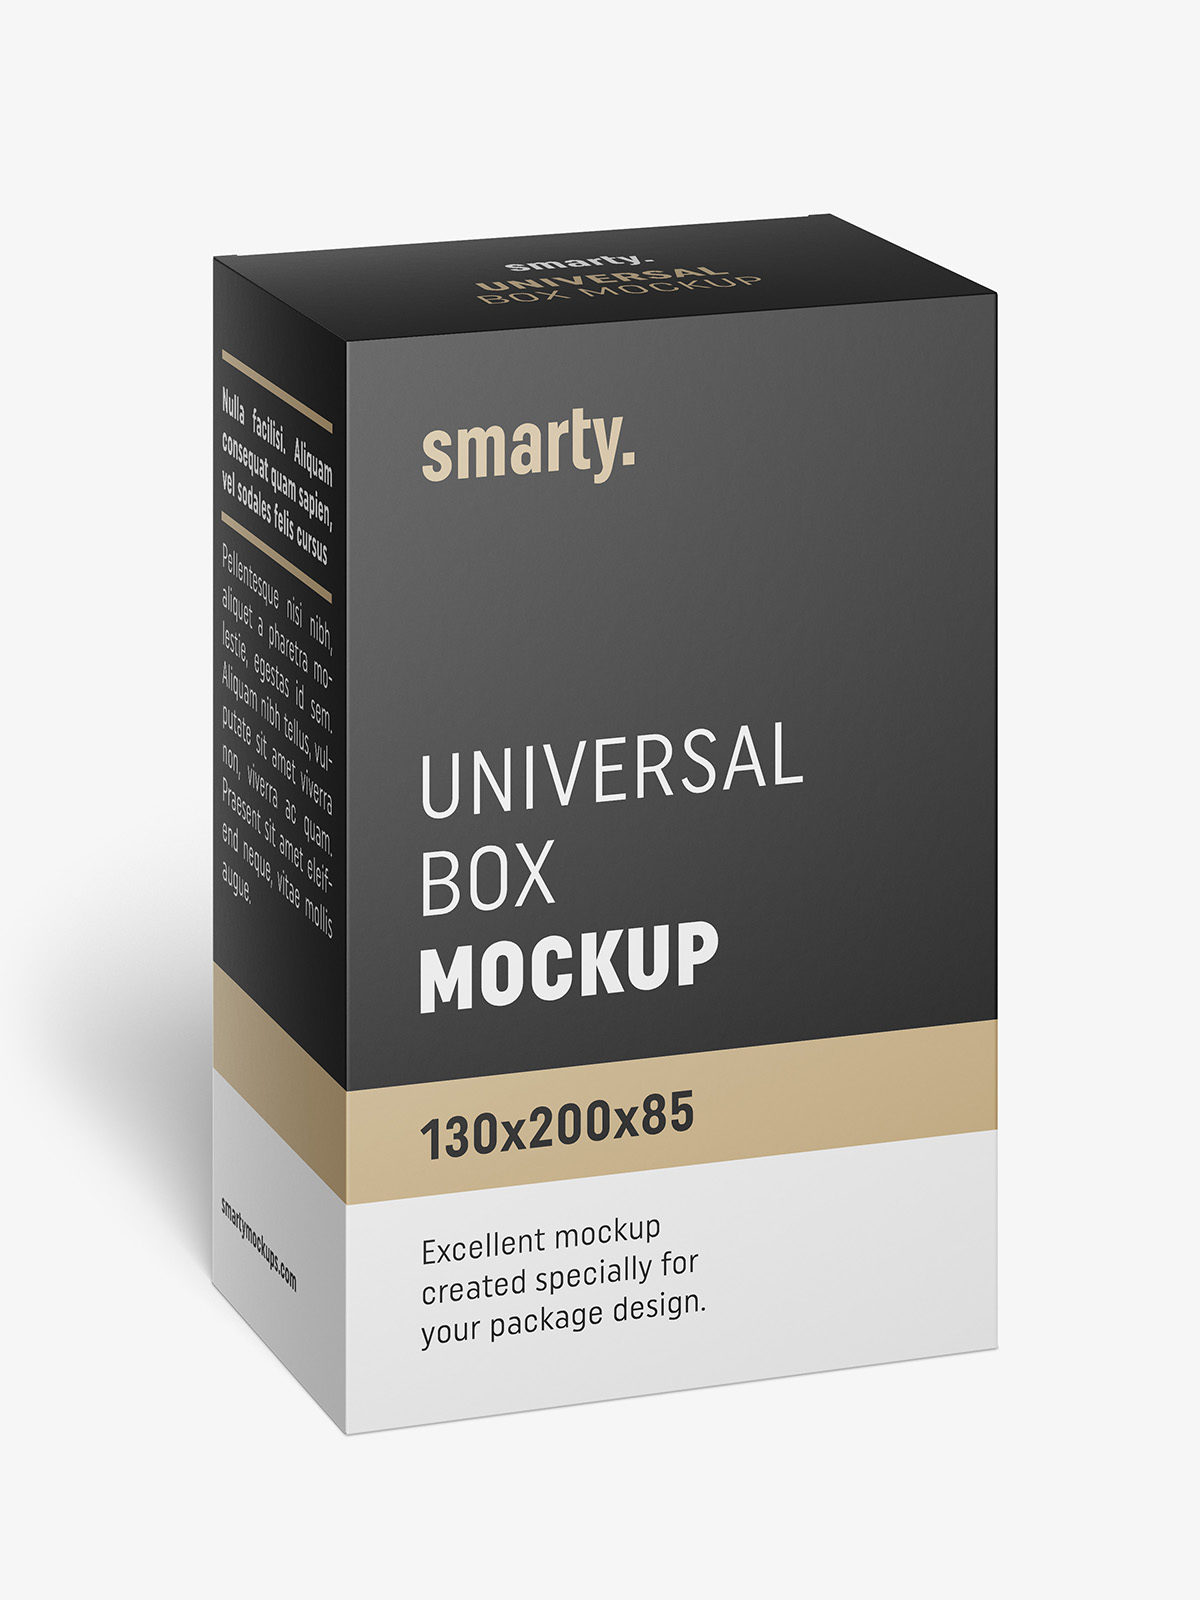 Download Box mockup / 130x200x85 - Smarty Mockups